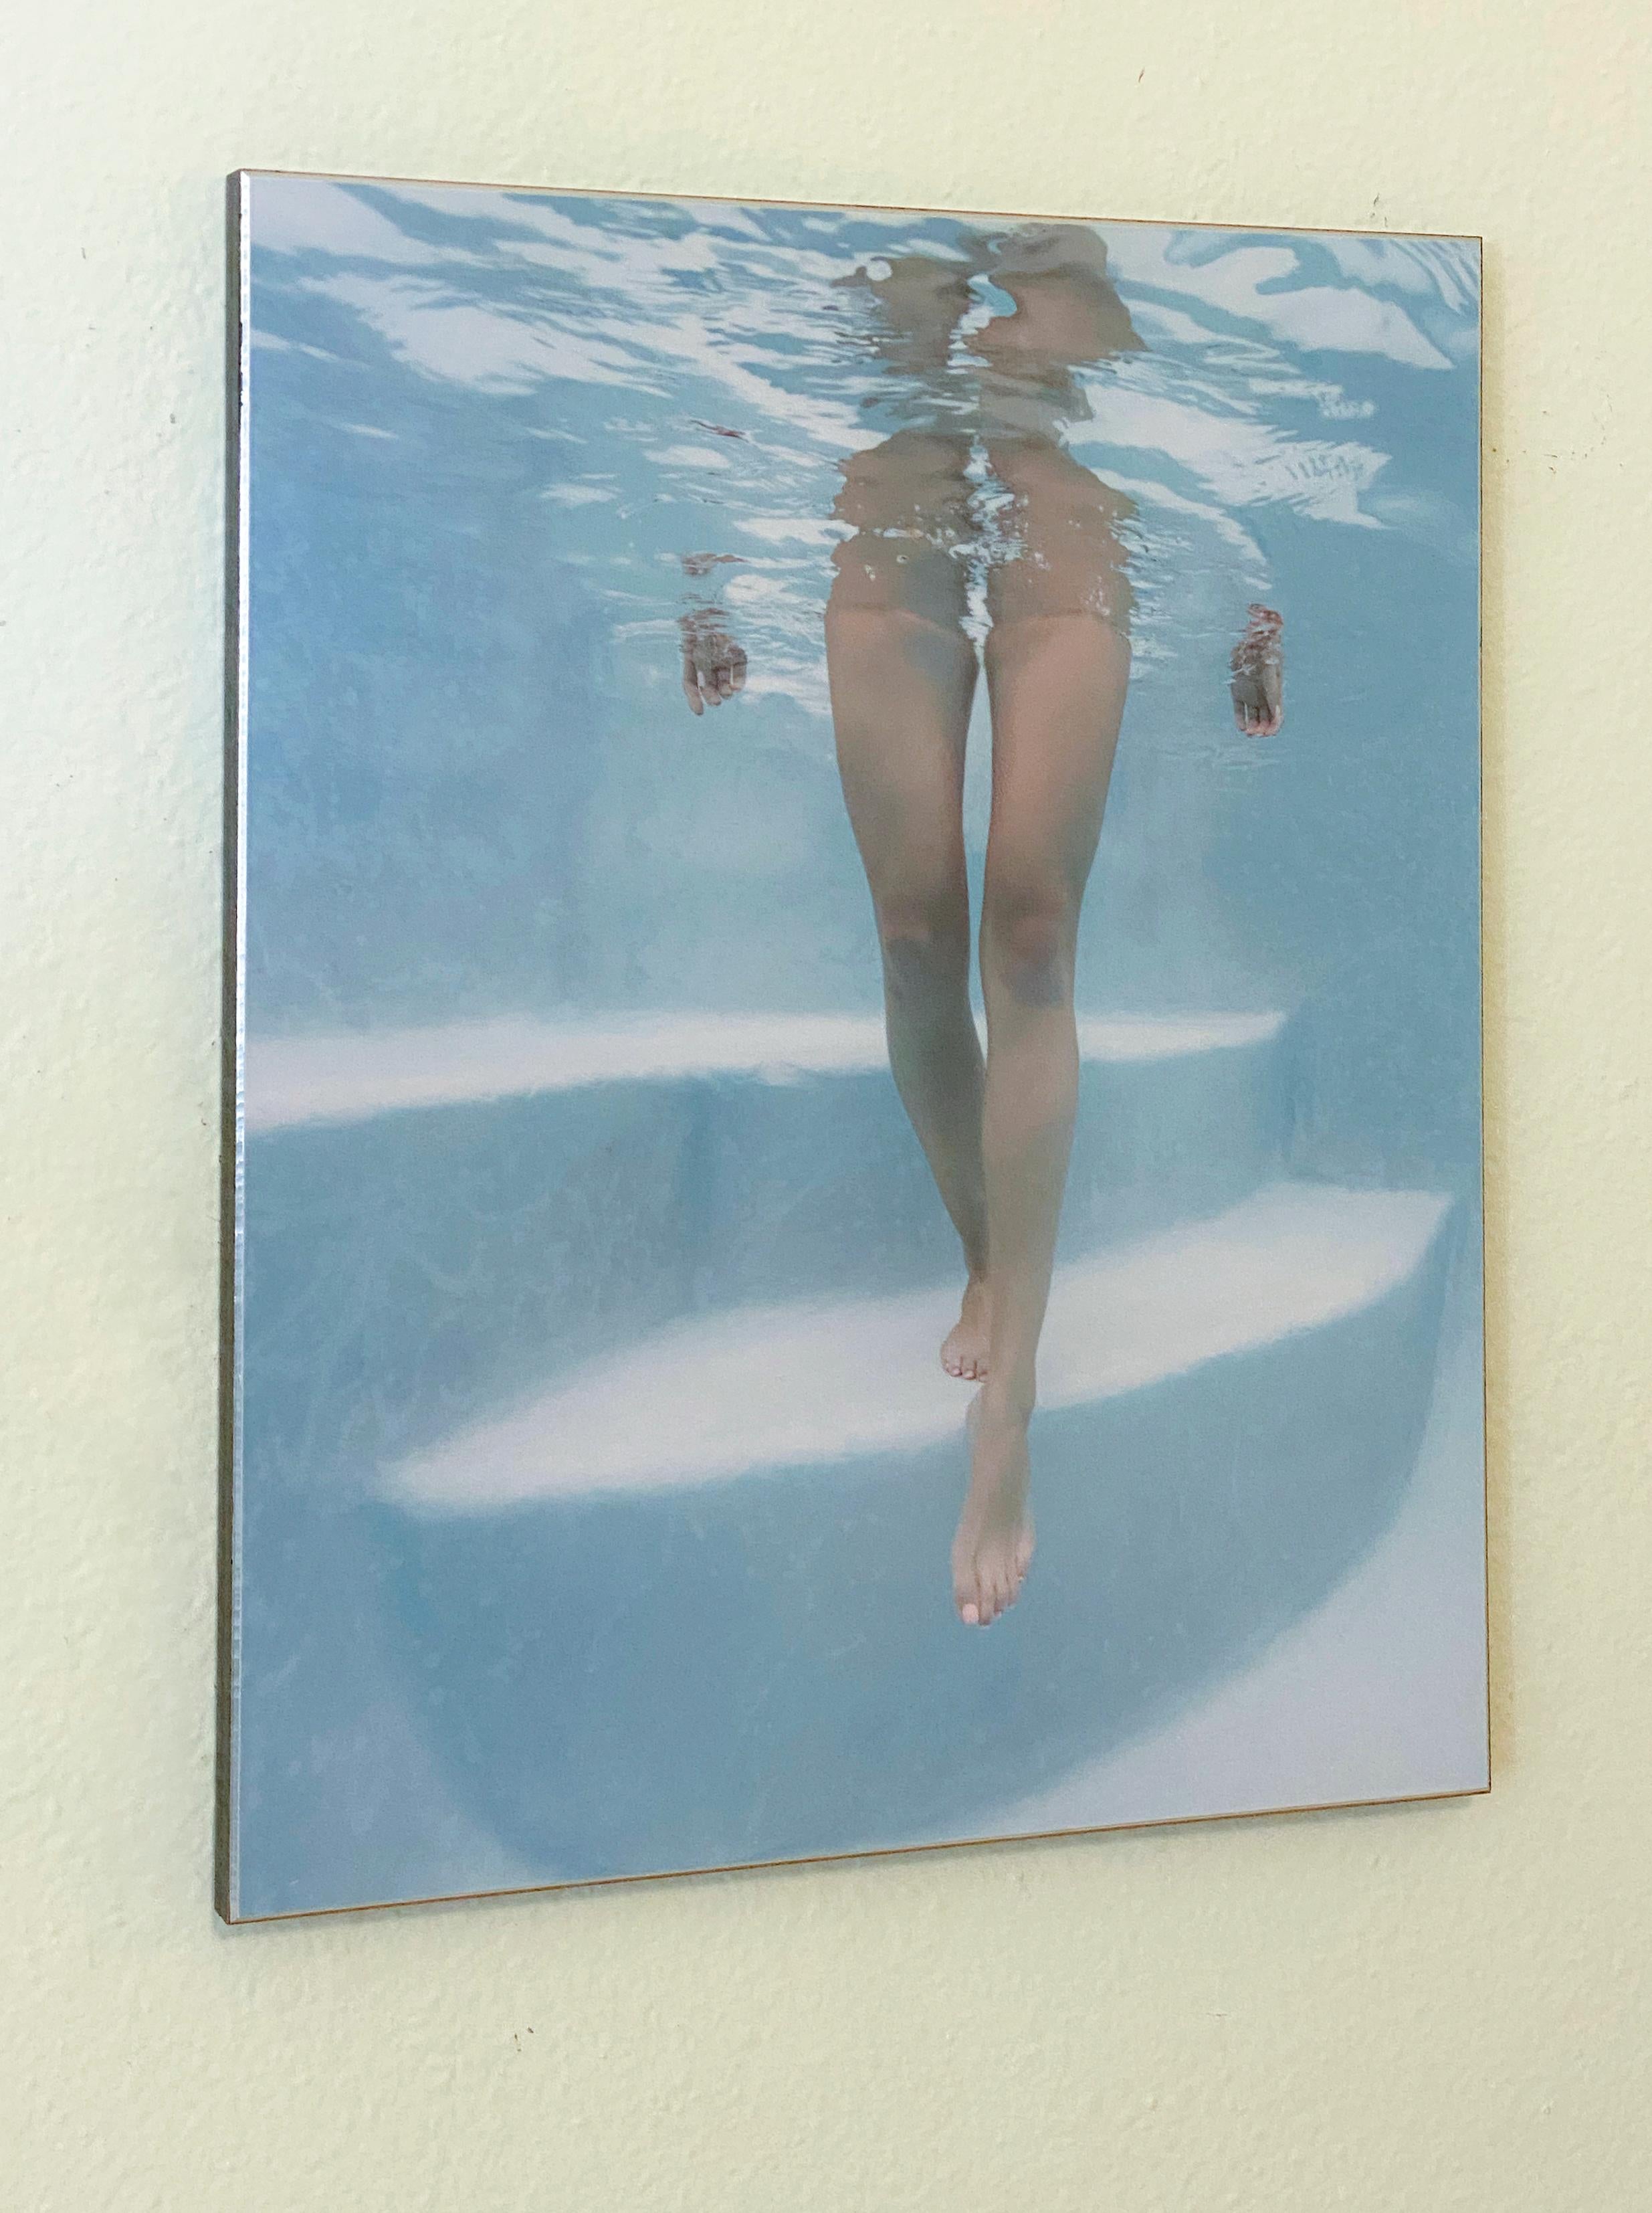 Steps - underwater photograph - print on aluminum 12 x 10